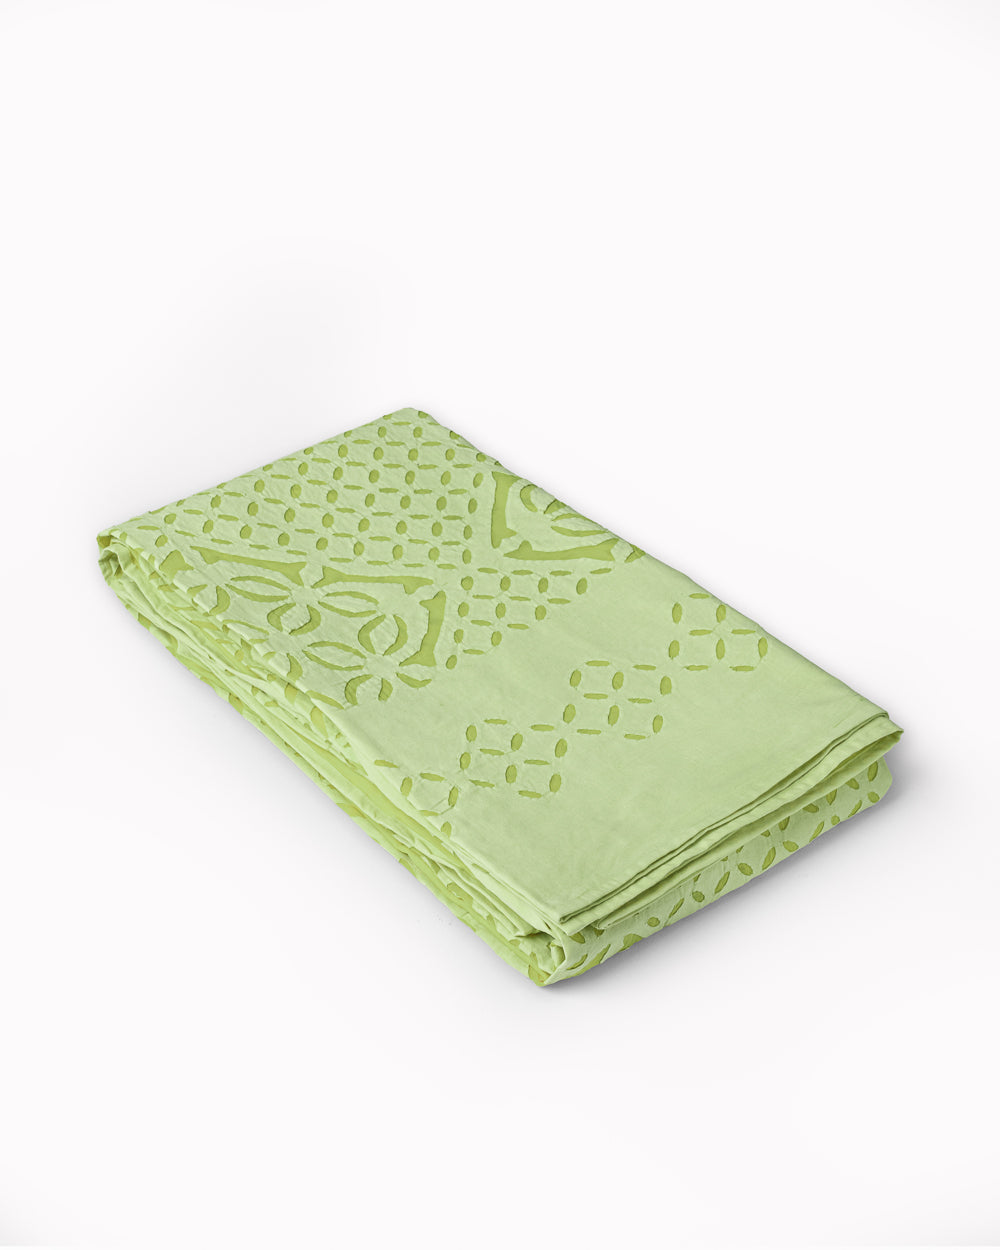 Bedcover Applique Mehndi Khuddi Design, Light Green